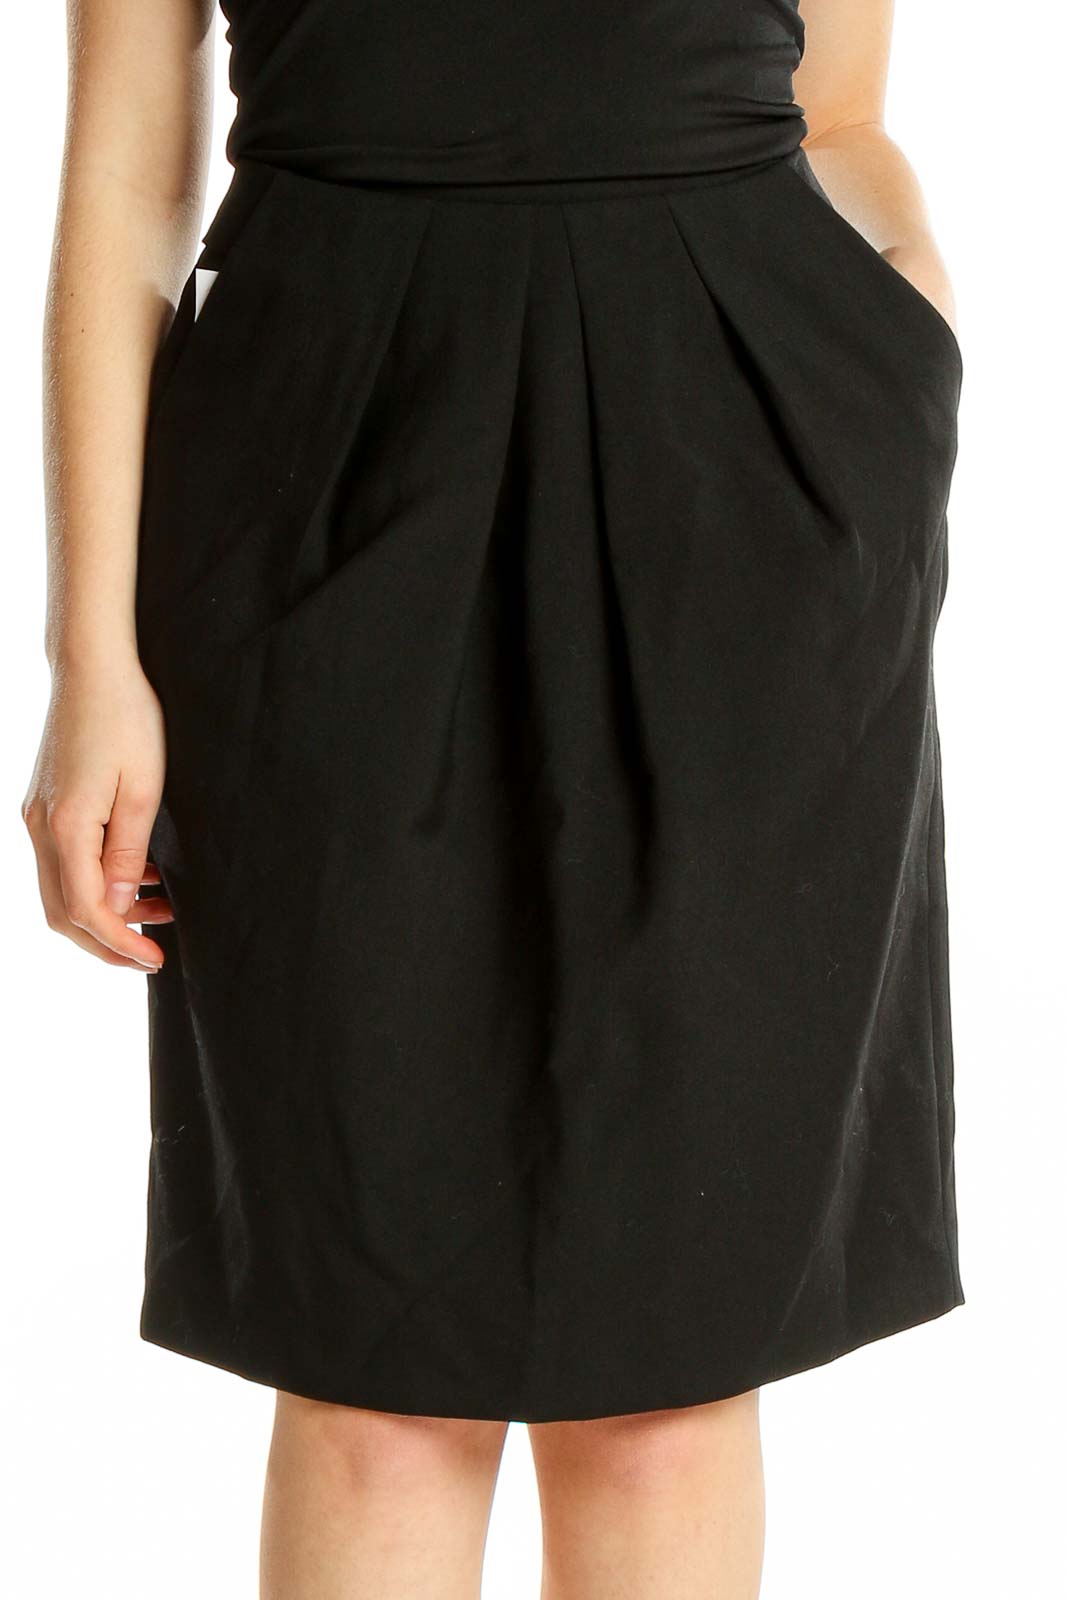 Black Pencil Skirt Front